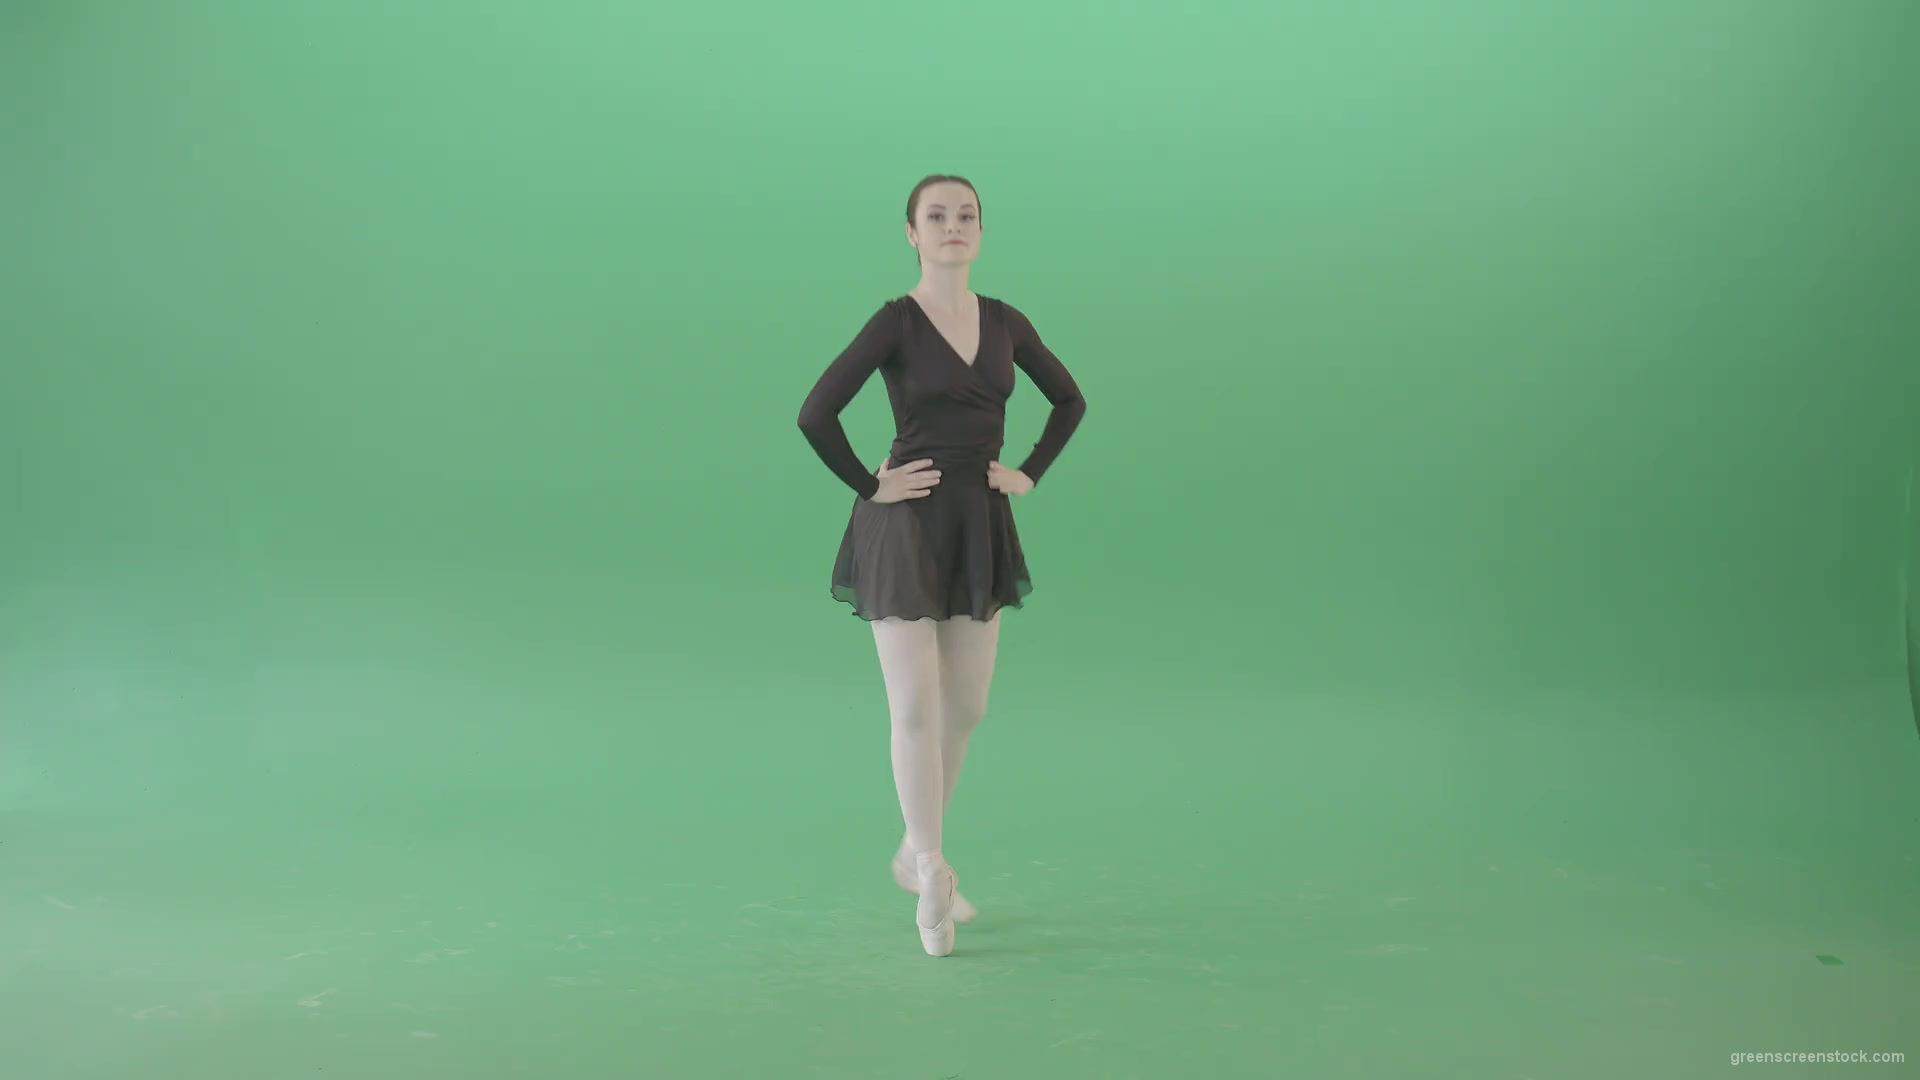 Ballet-Art-Ballerina-girl-spinning-in-dance-on-green-screen-4K-Video-Footage-1920_001 Green Screen Stock